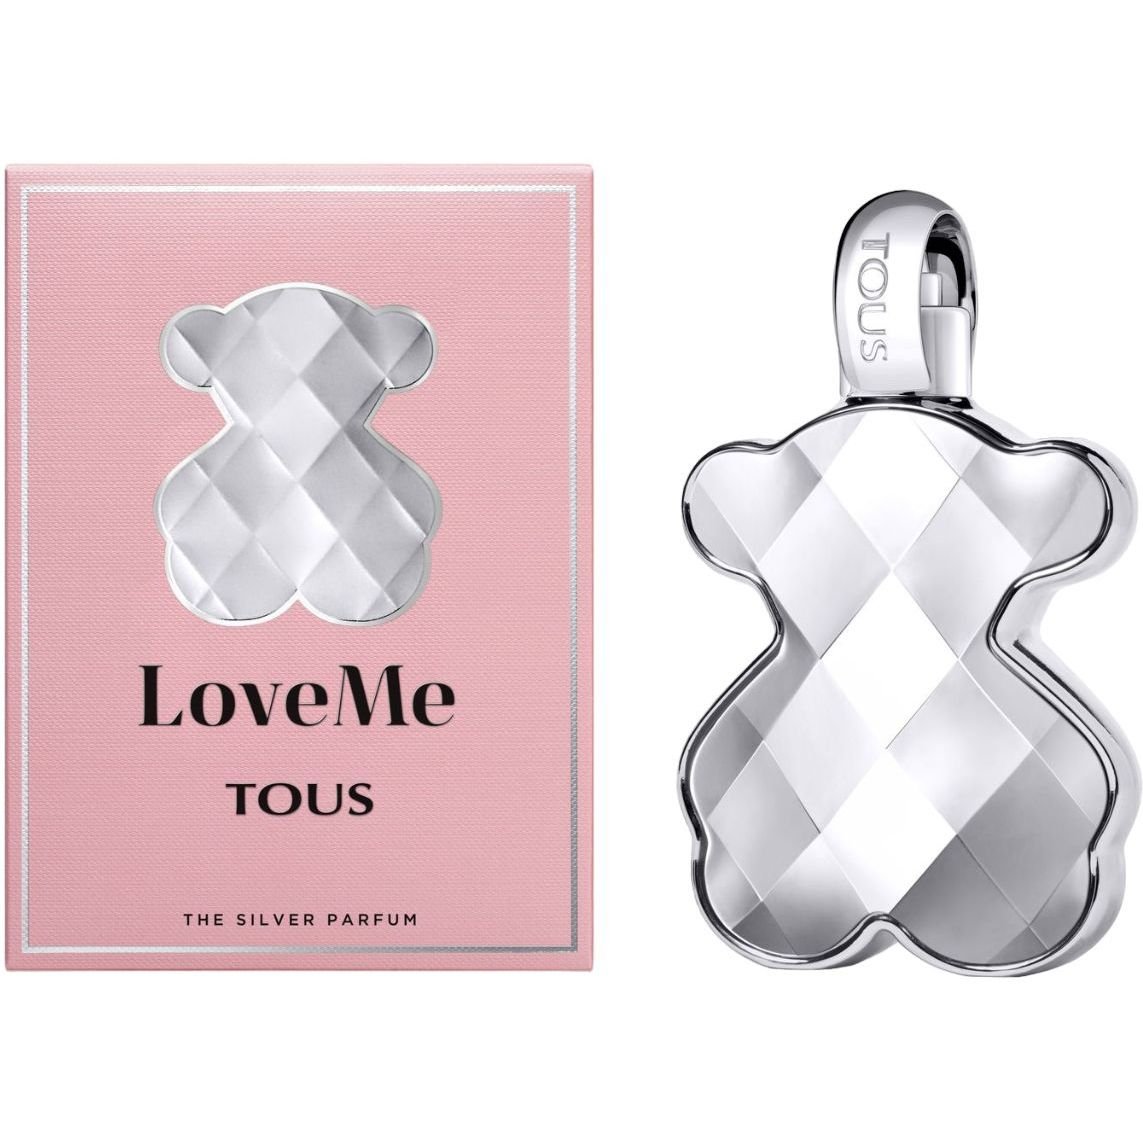 Парфюмированная вода для женщин Tous LoveMe The Silver Parfum, 90 мл - фото 1